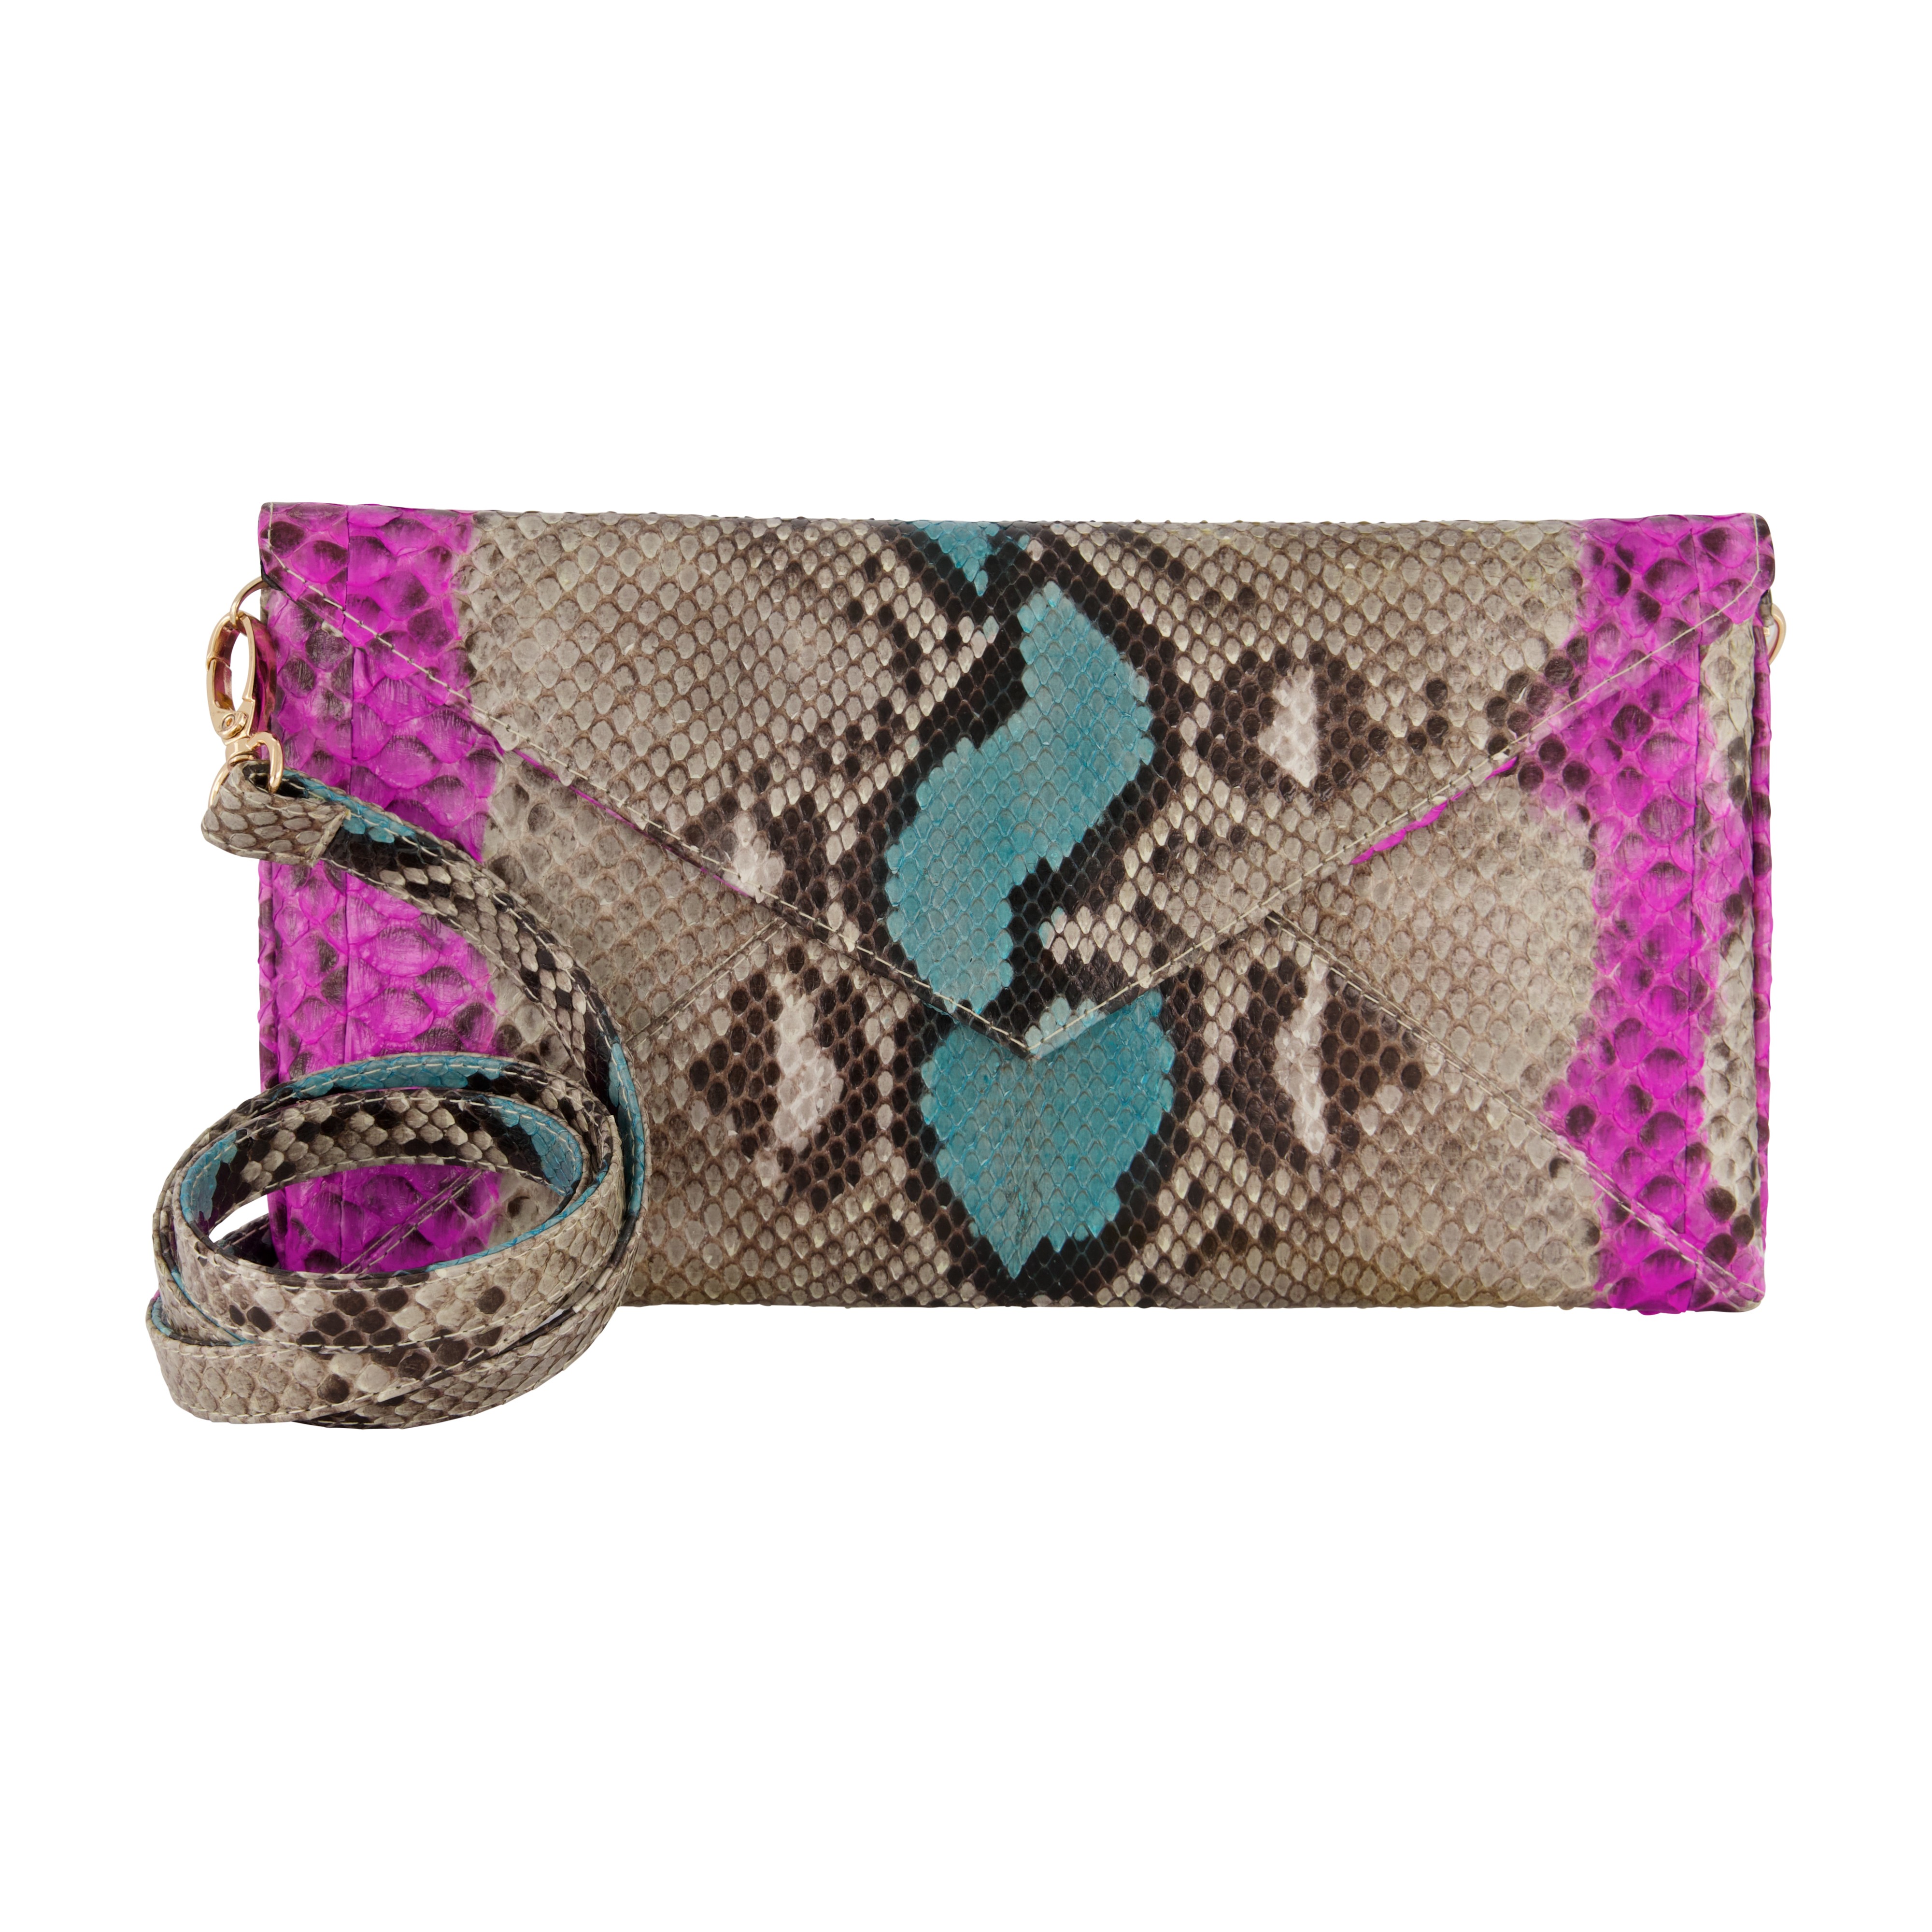 INZI Snake & Birds Clutch Handbag